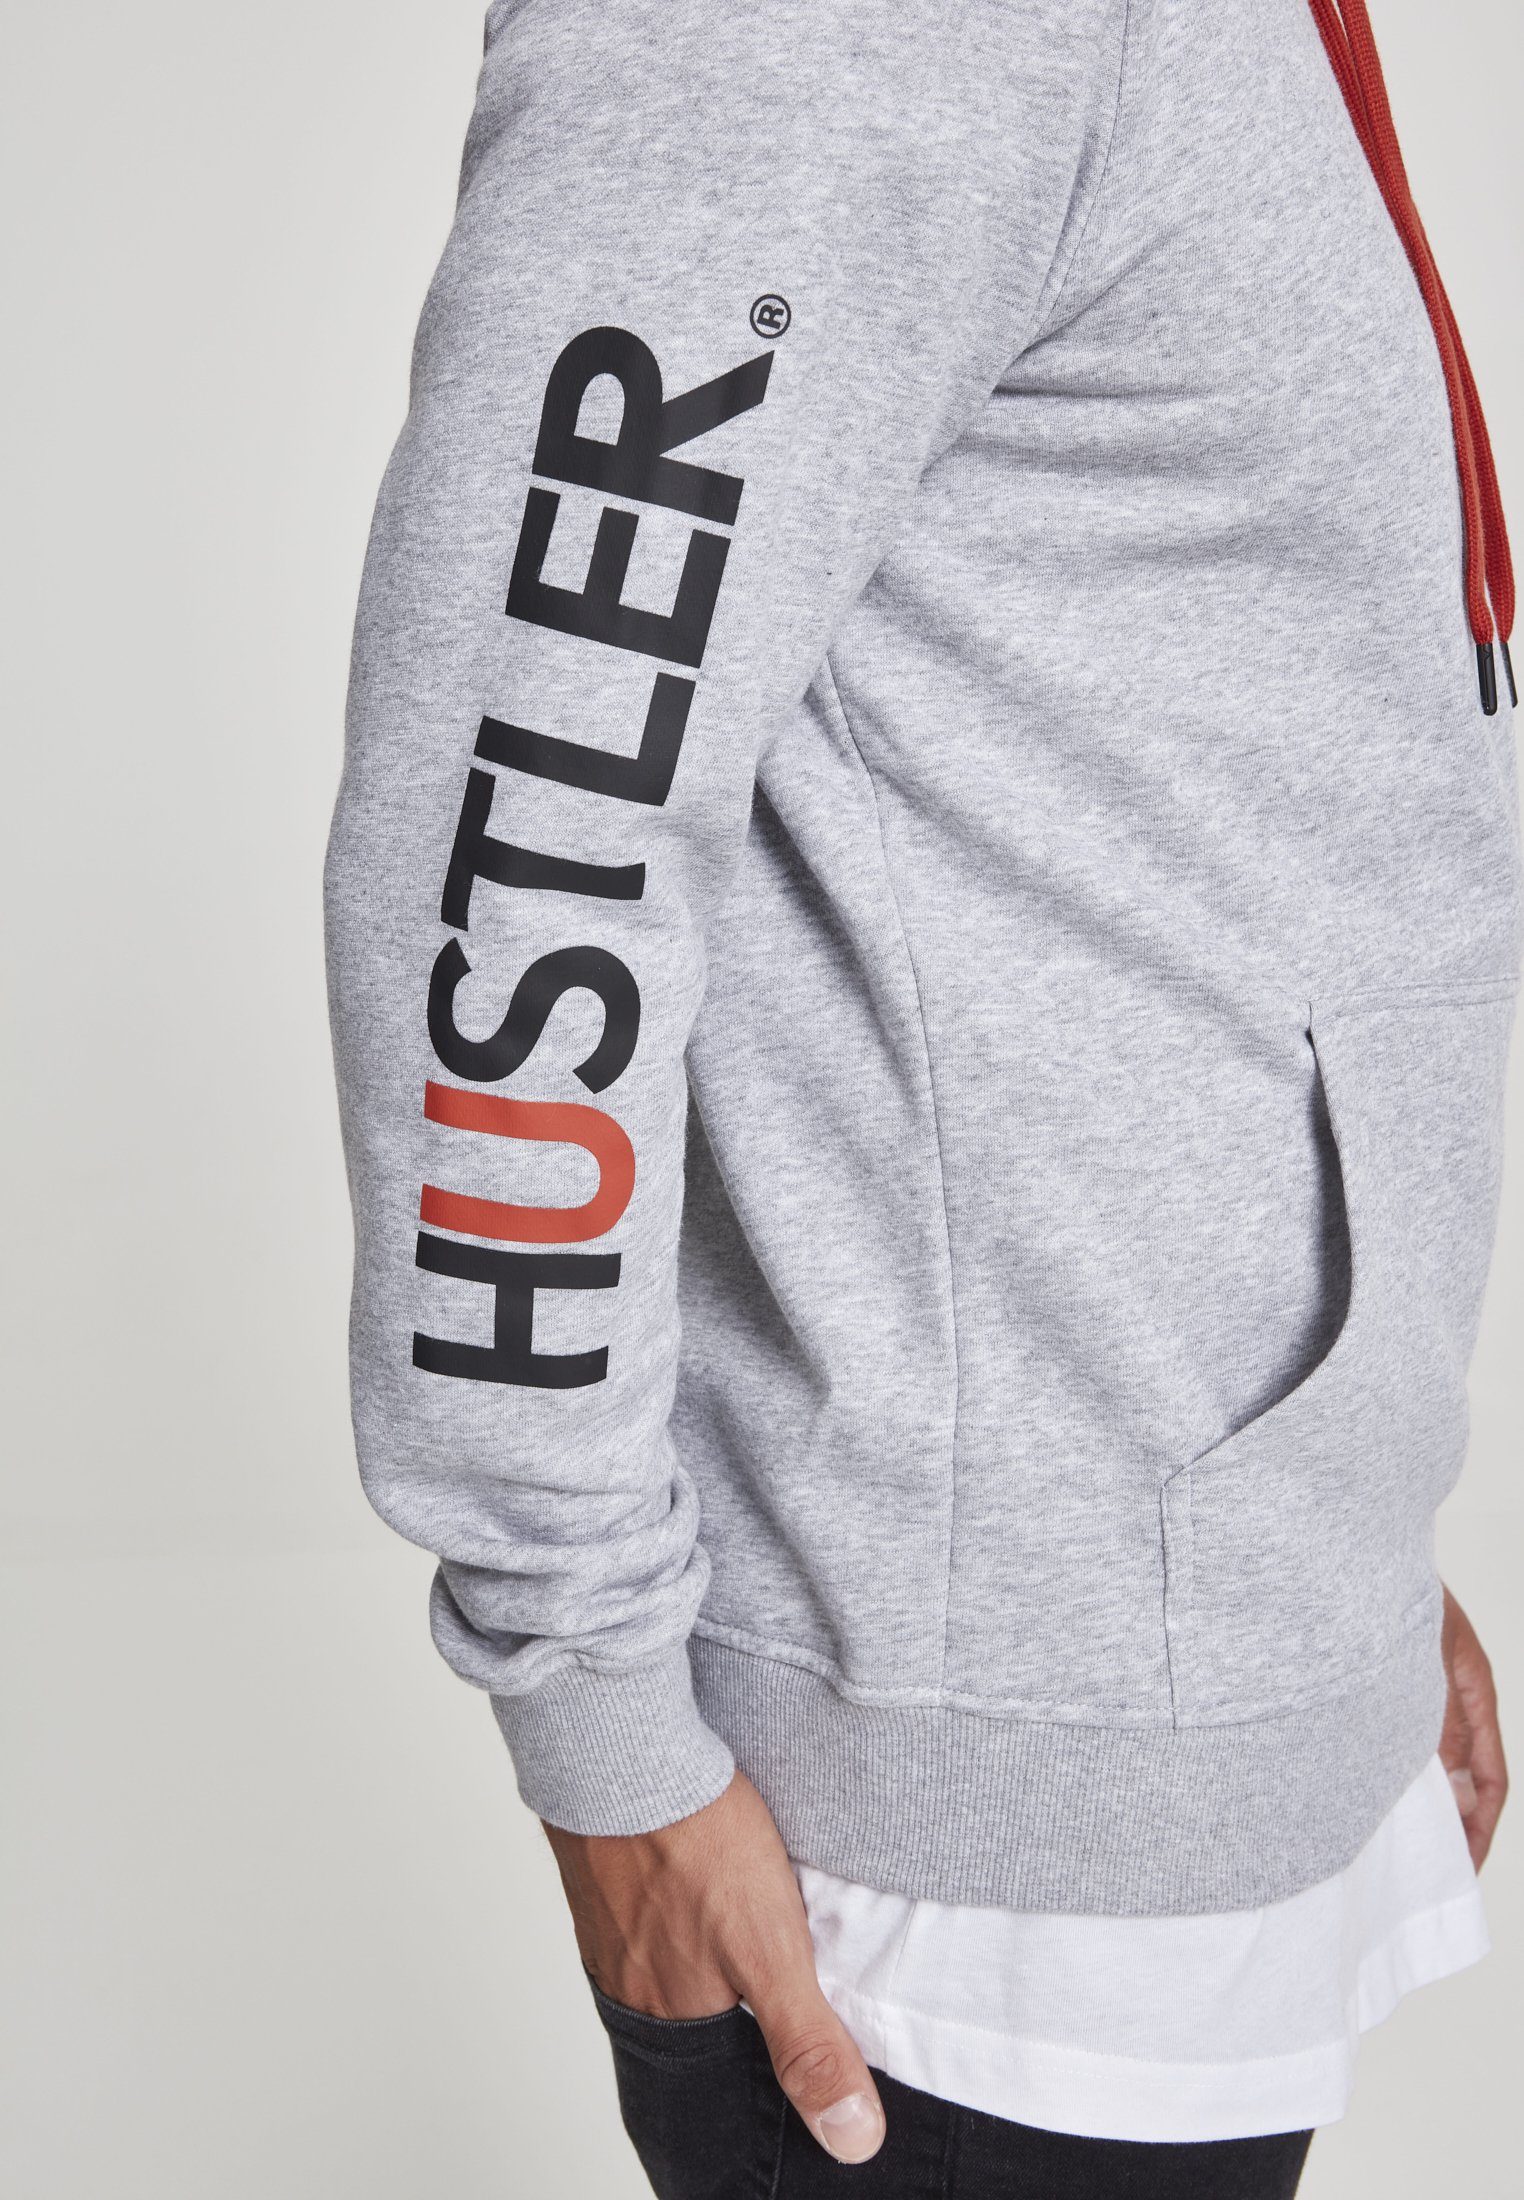 Logo Hoody Herren (1-tlg) Sweater Merchcode Hustler